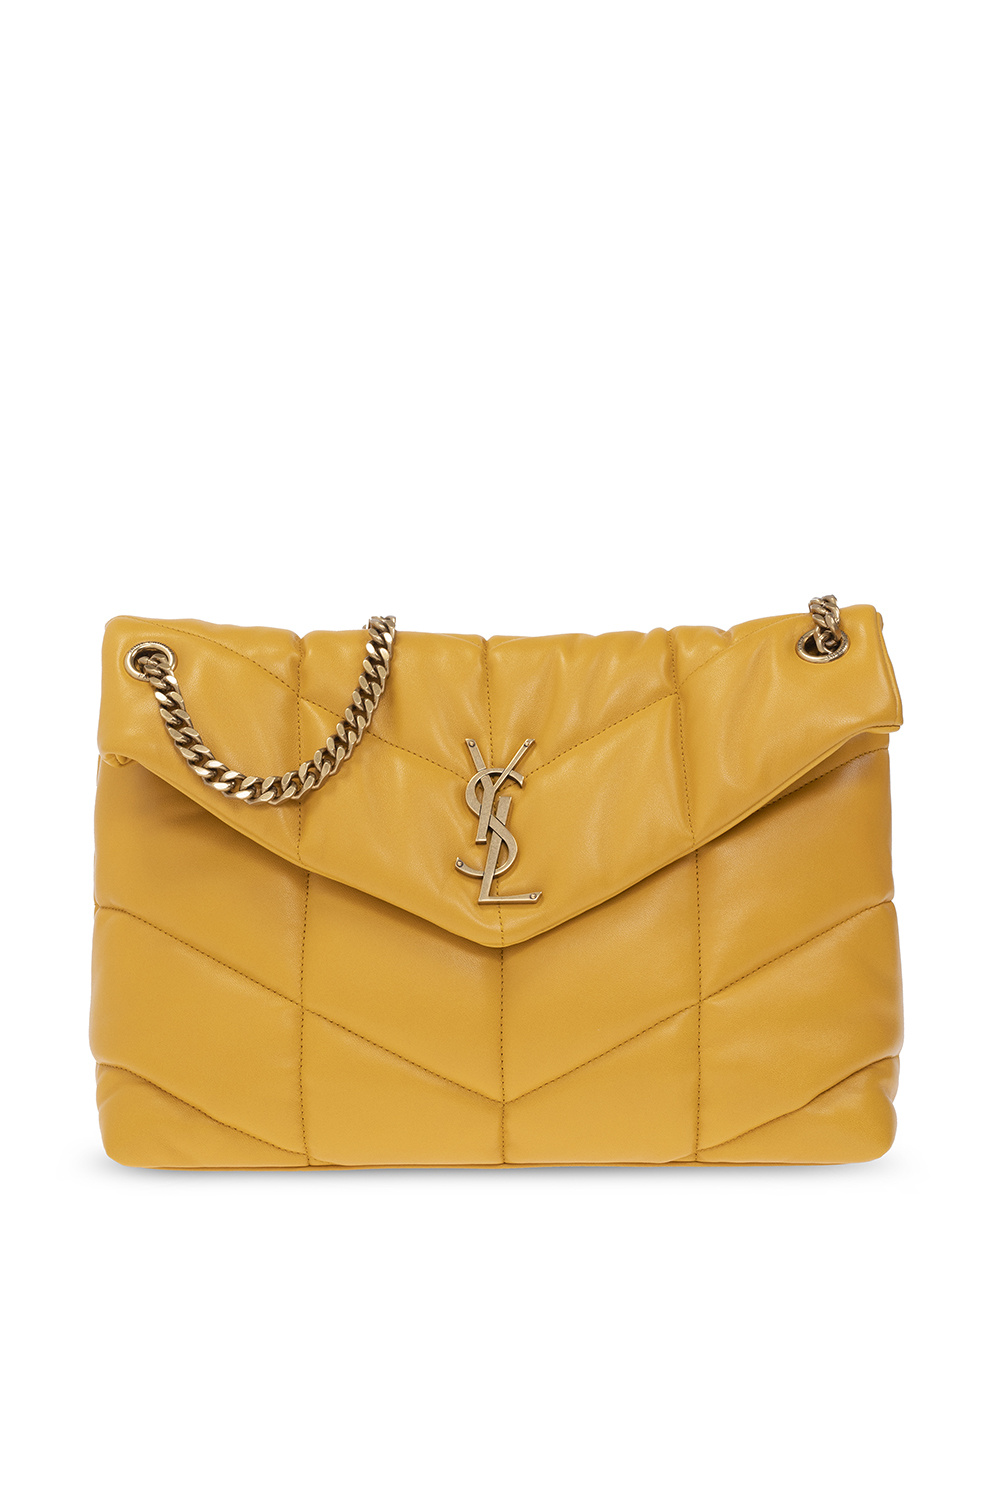 Yves Saint Laurent Shoulder Bags for Women for sale